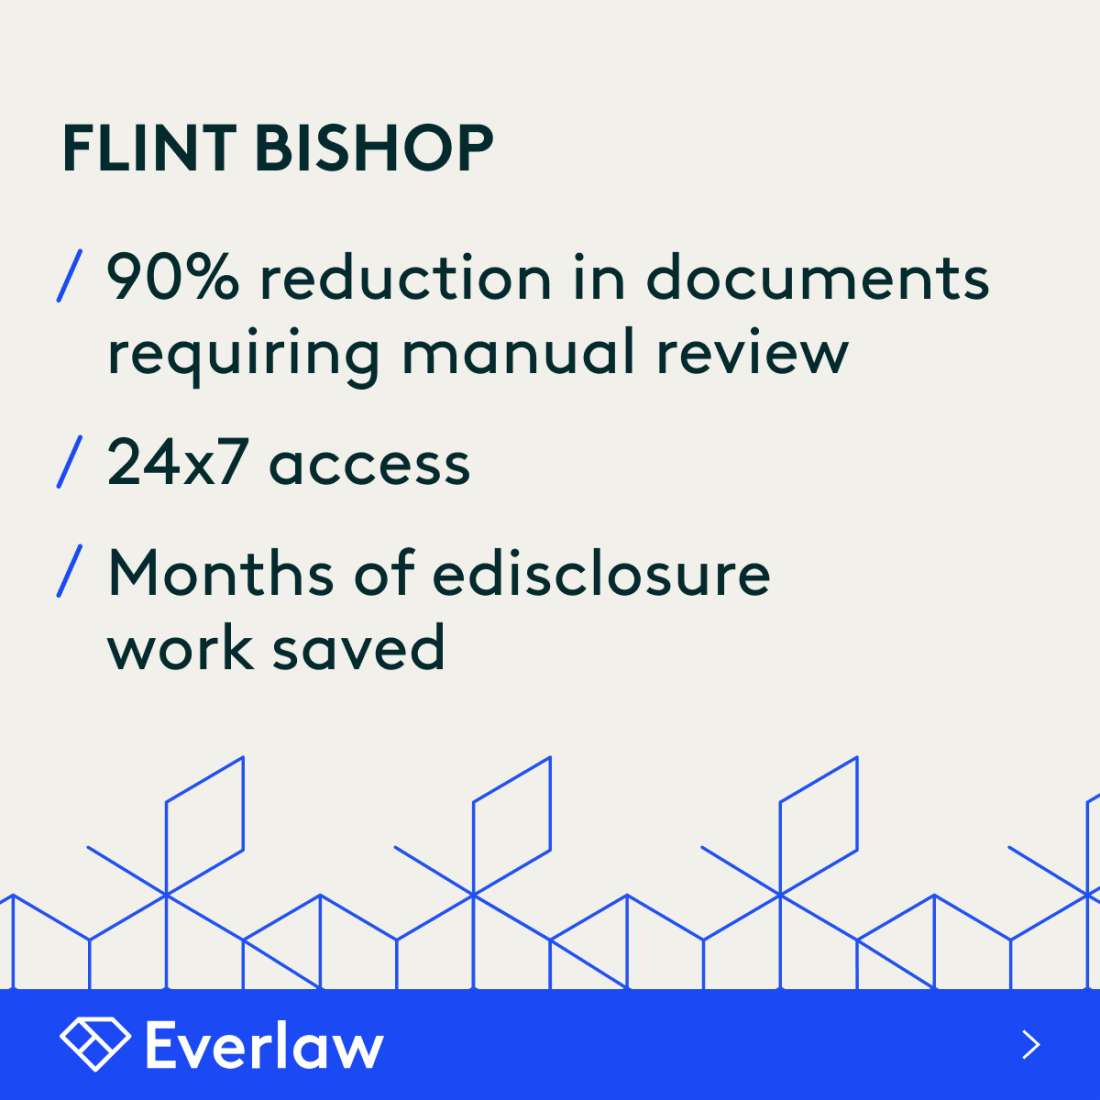 flint-bishop-stats-card